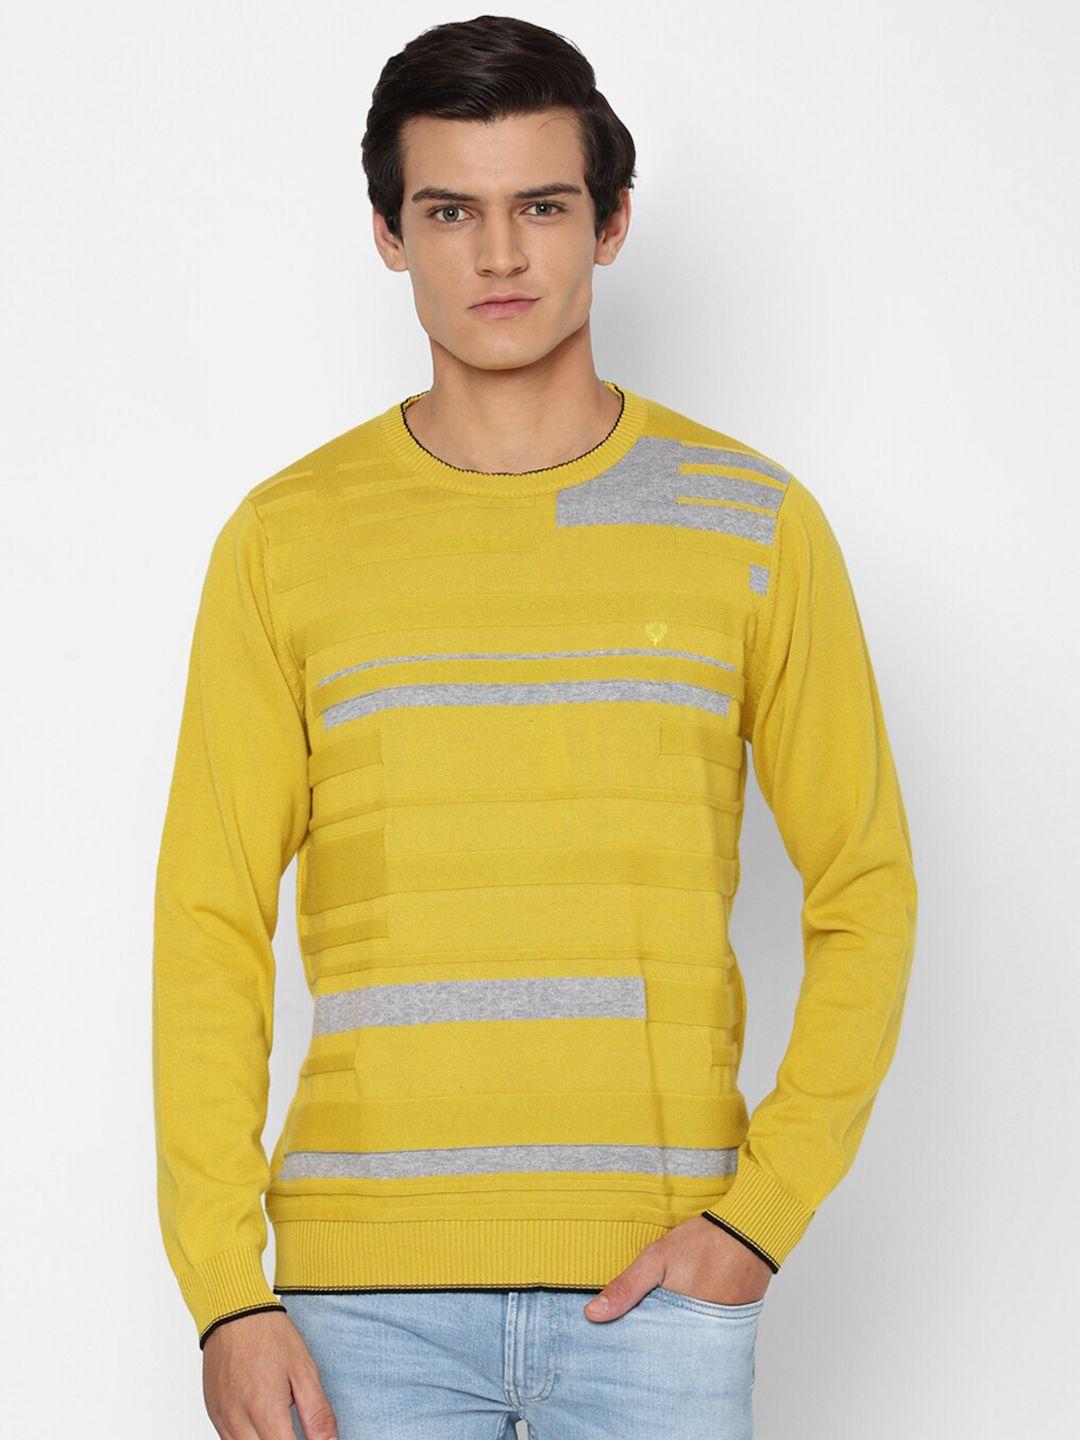 allen solly men yellow & grey cotton pullover